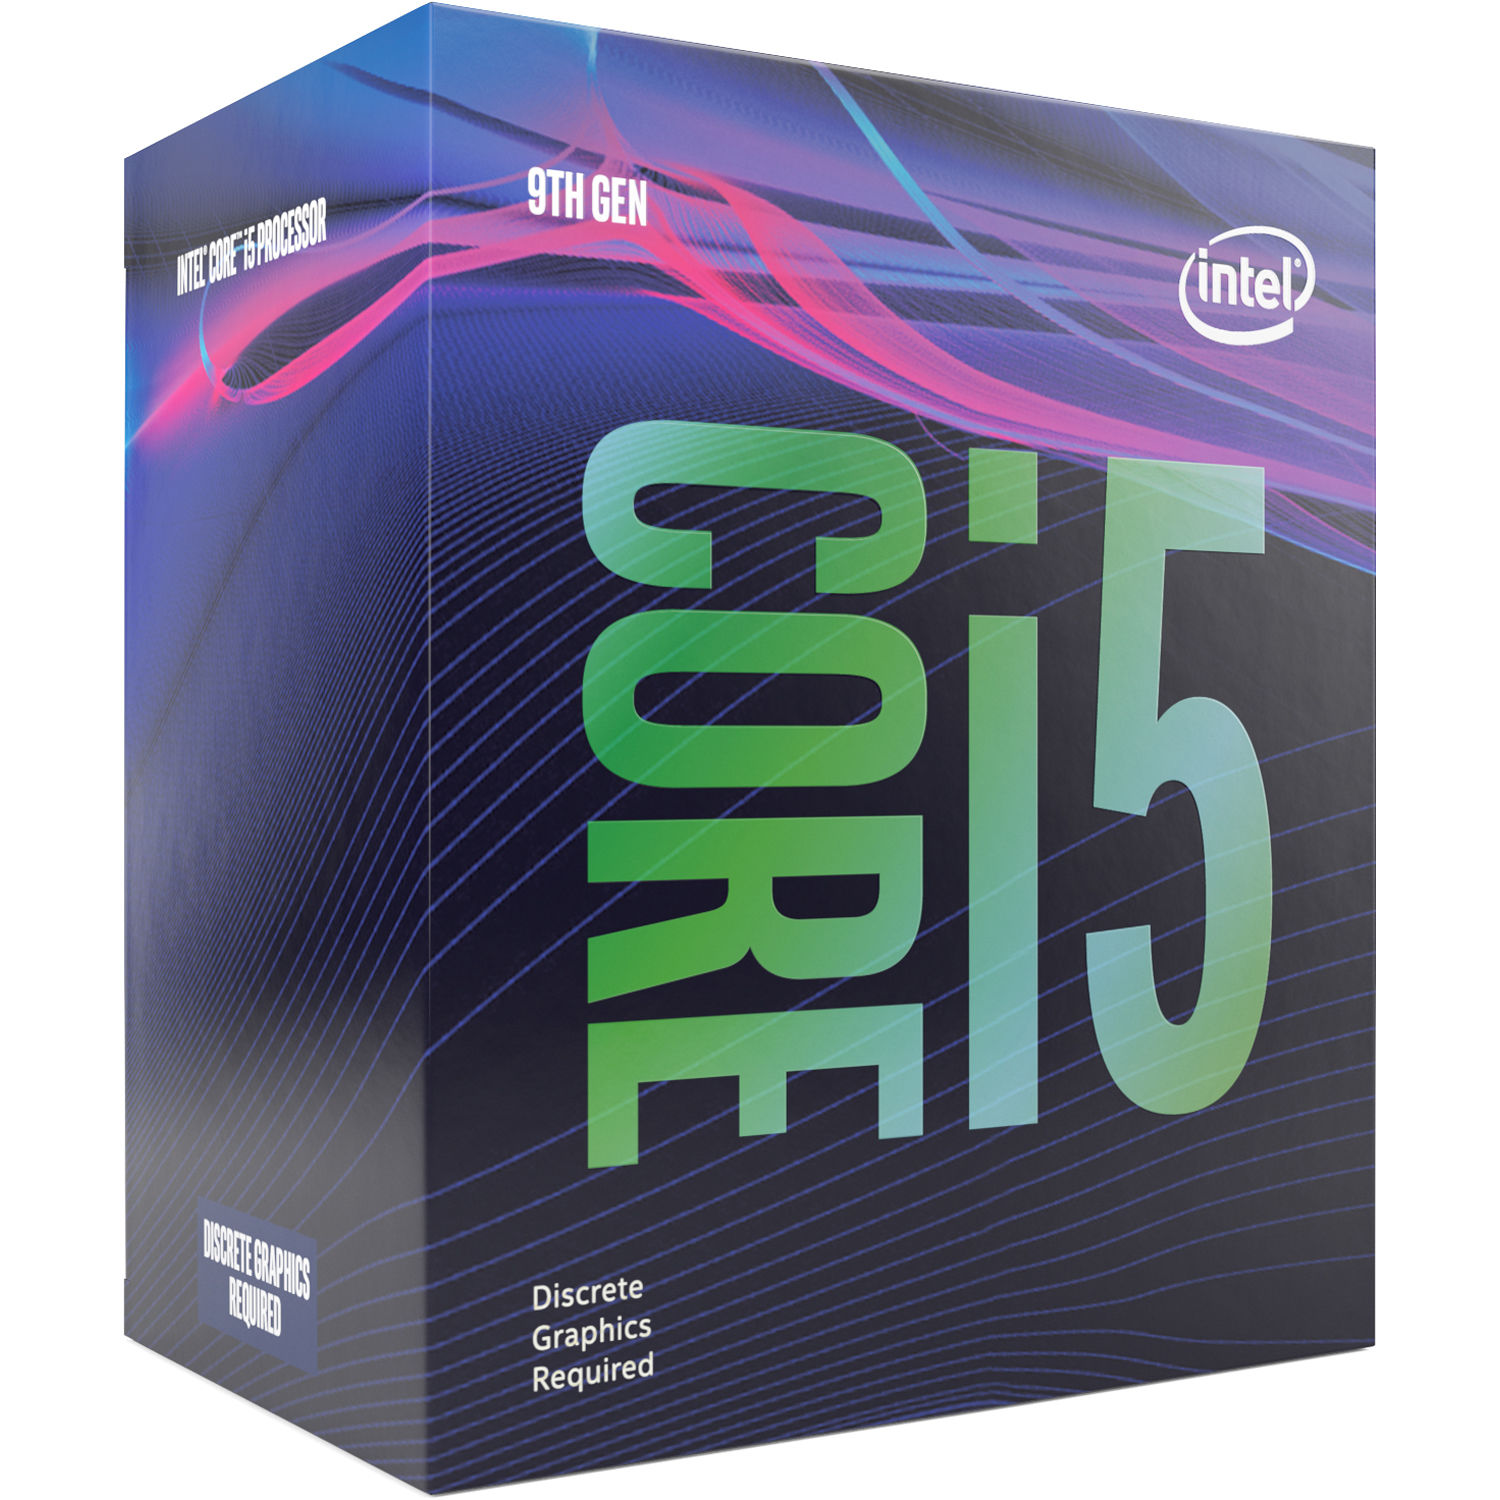 Boxed Intel Core i5-9400 Processor (9M Cache, up to 4.10 GHz) FC-LGA14A